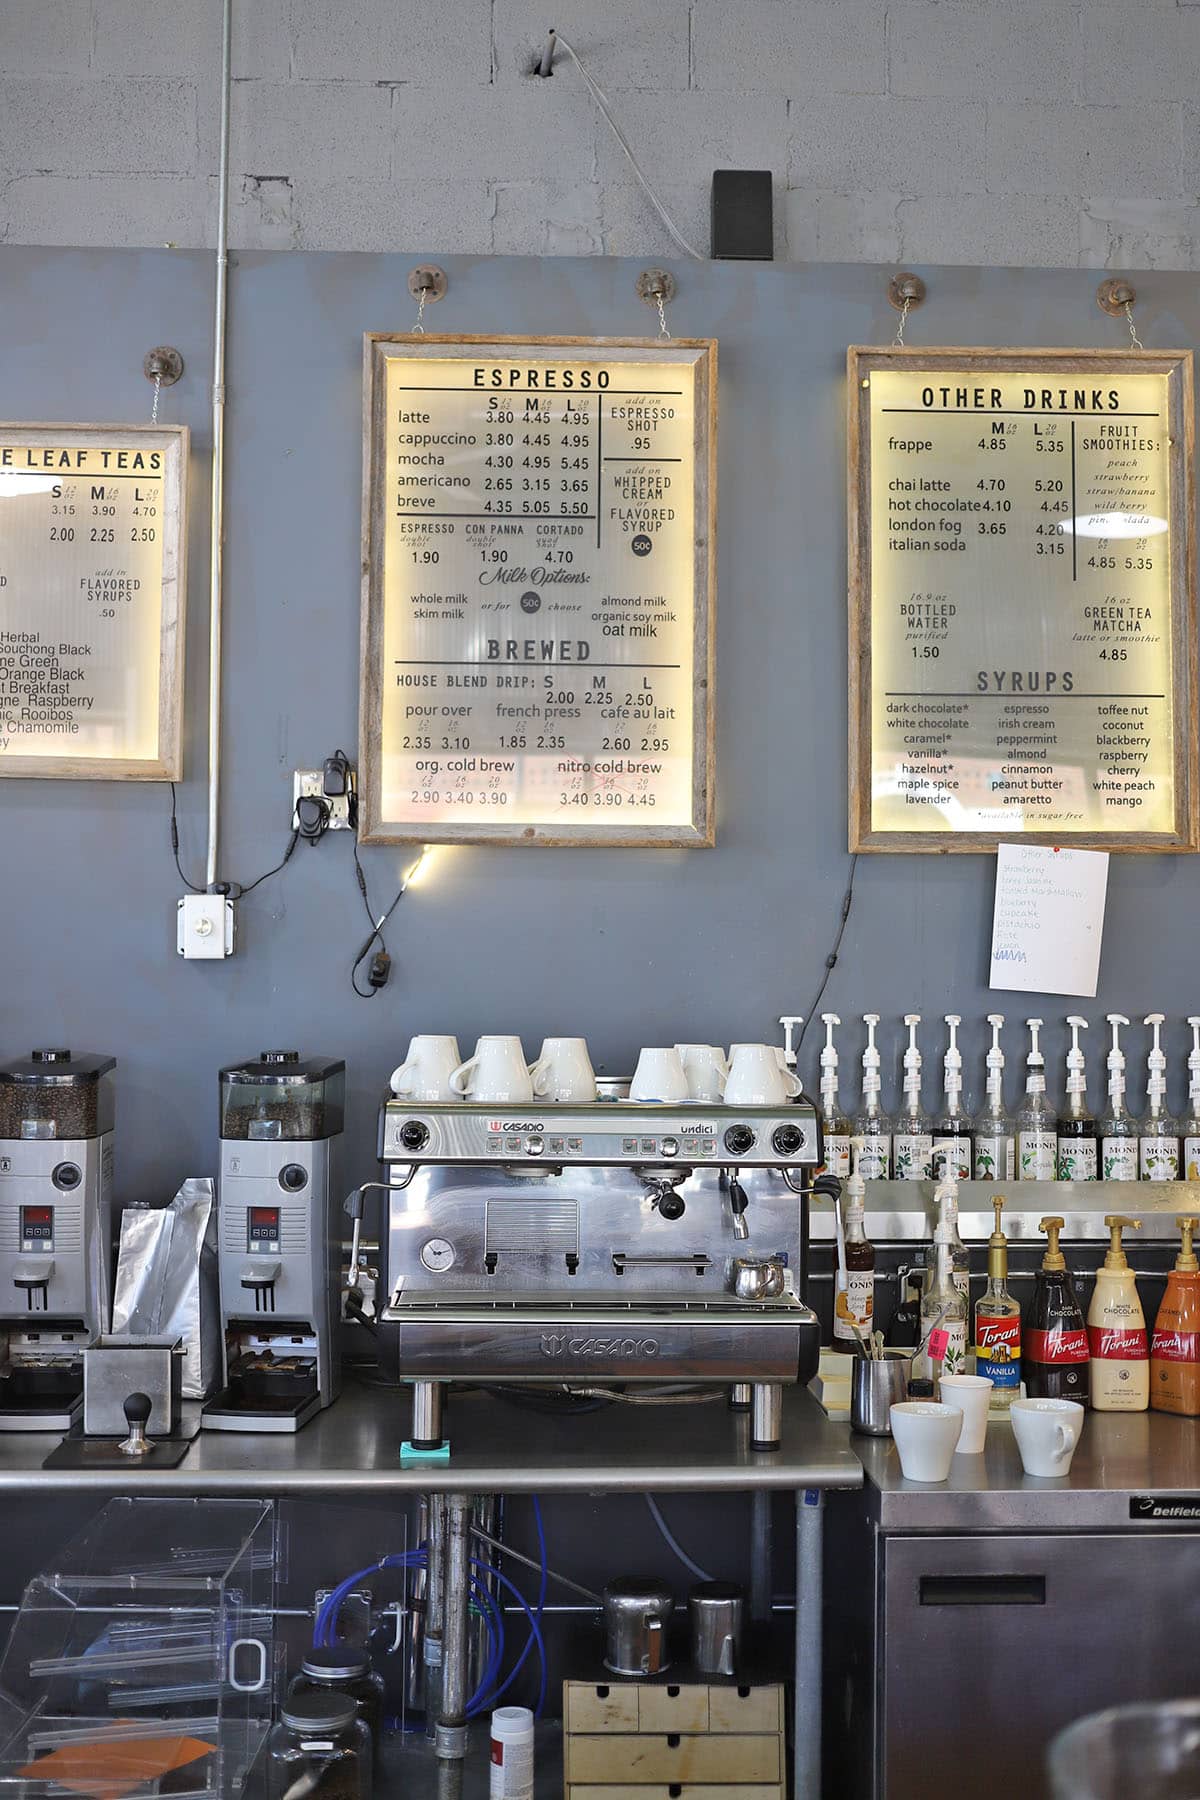 Wall menu and espresso machine.